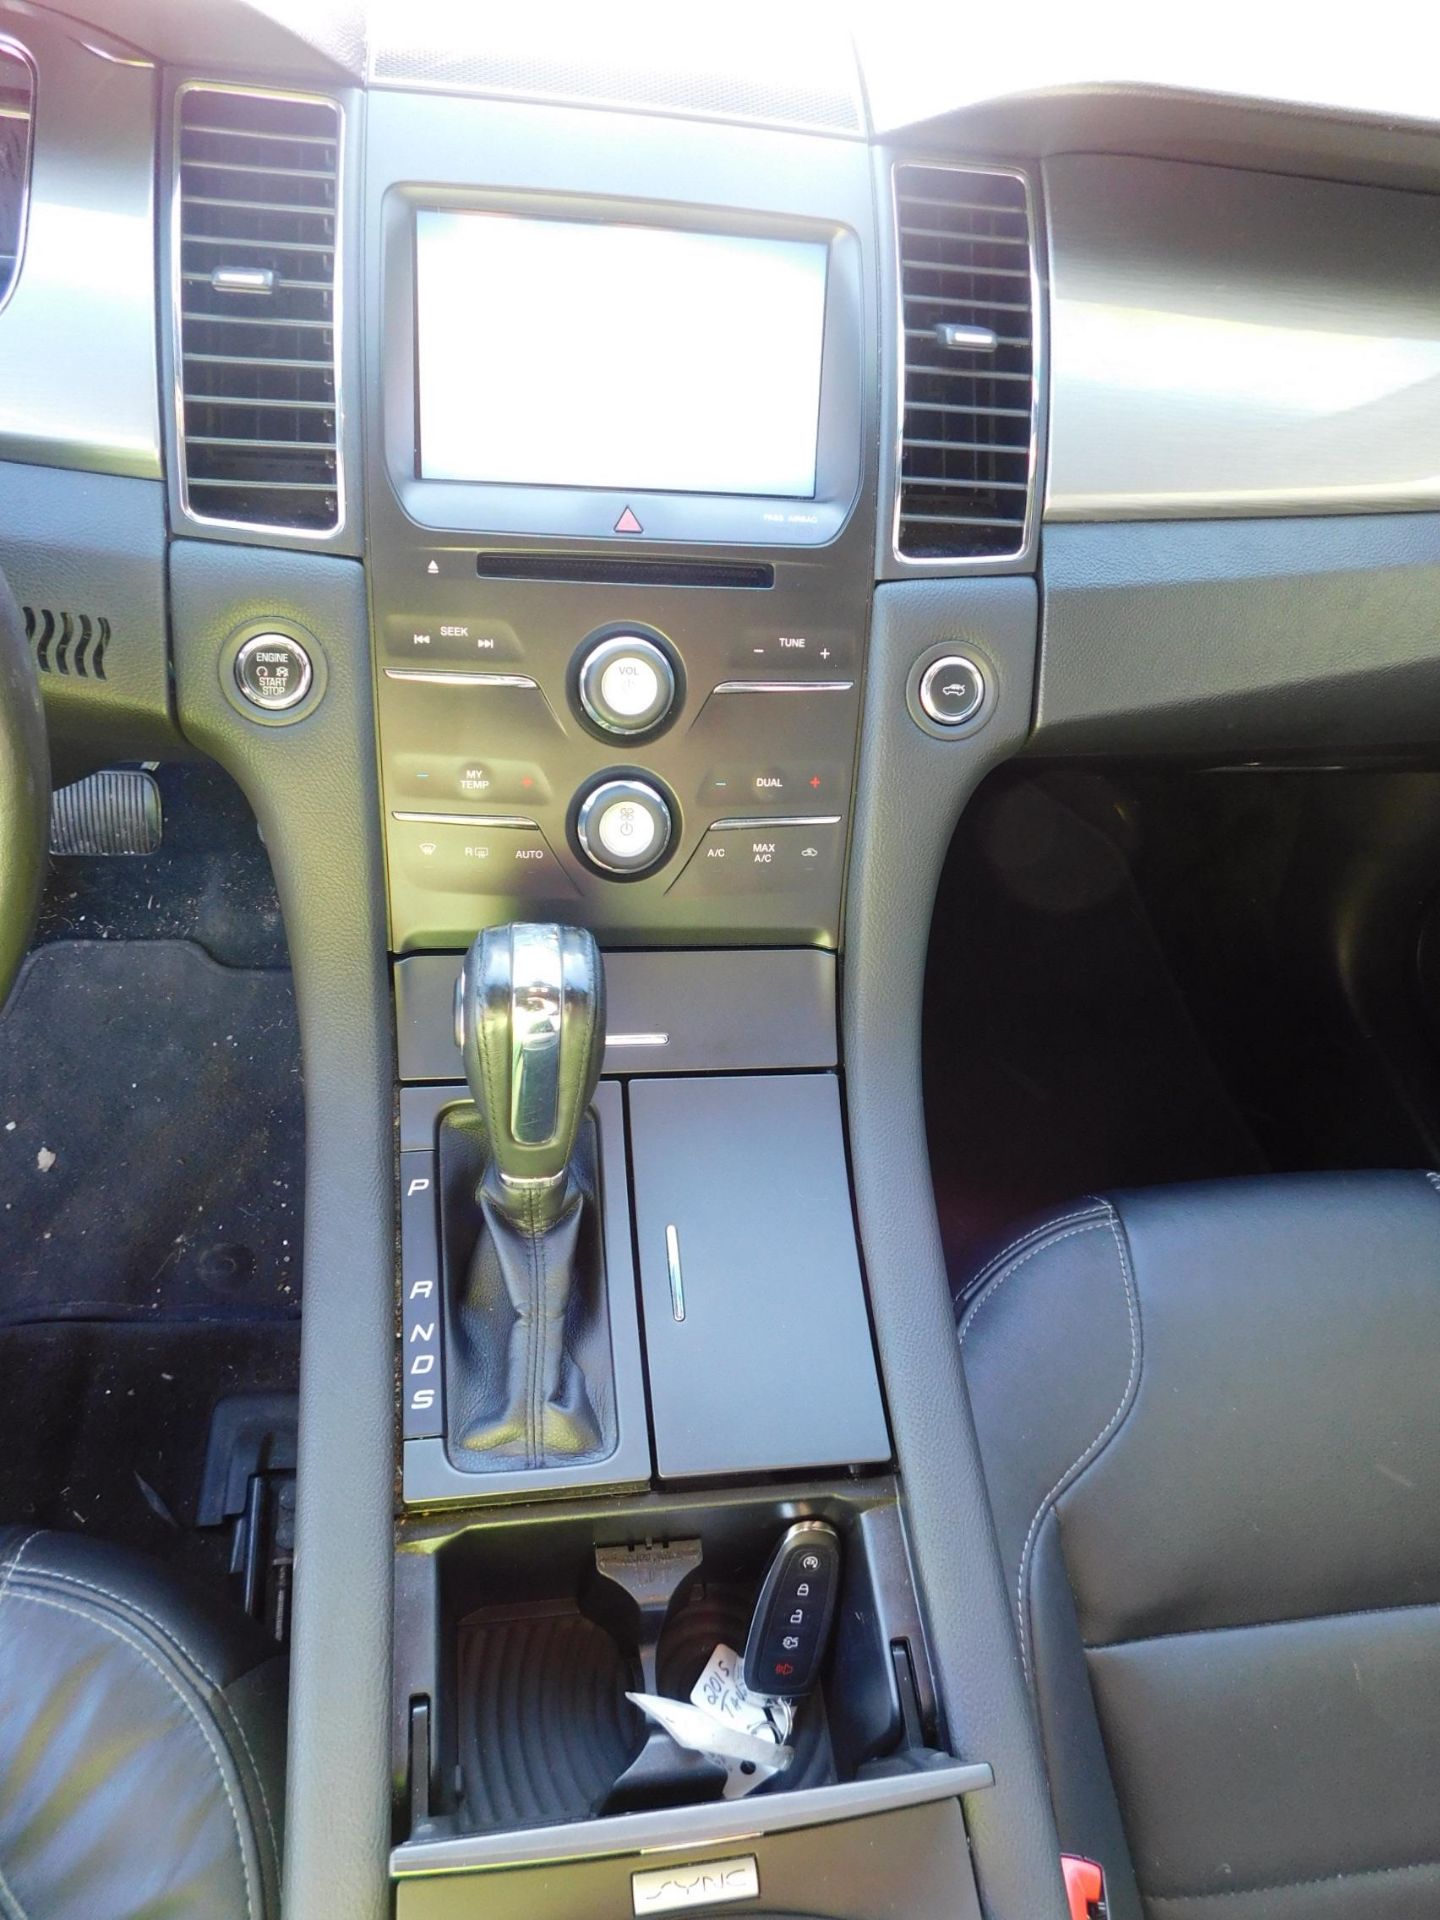 2015 Ford Taurus SEL 4-Door Sedan, vin 1FAHP2E80FG182717, Automatic Transmission, PW,PL,AC,Leather - Image 26 of 42